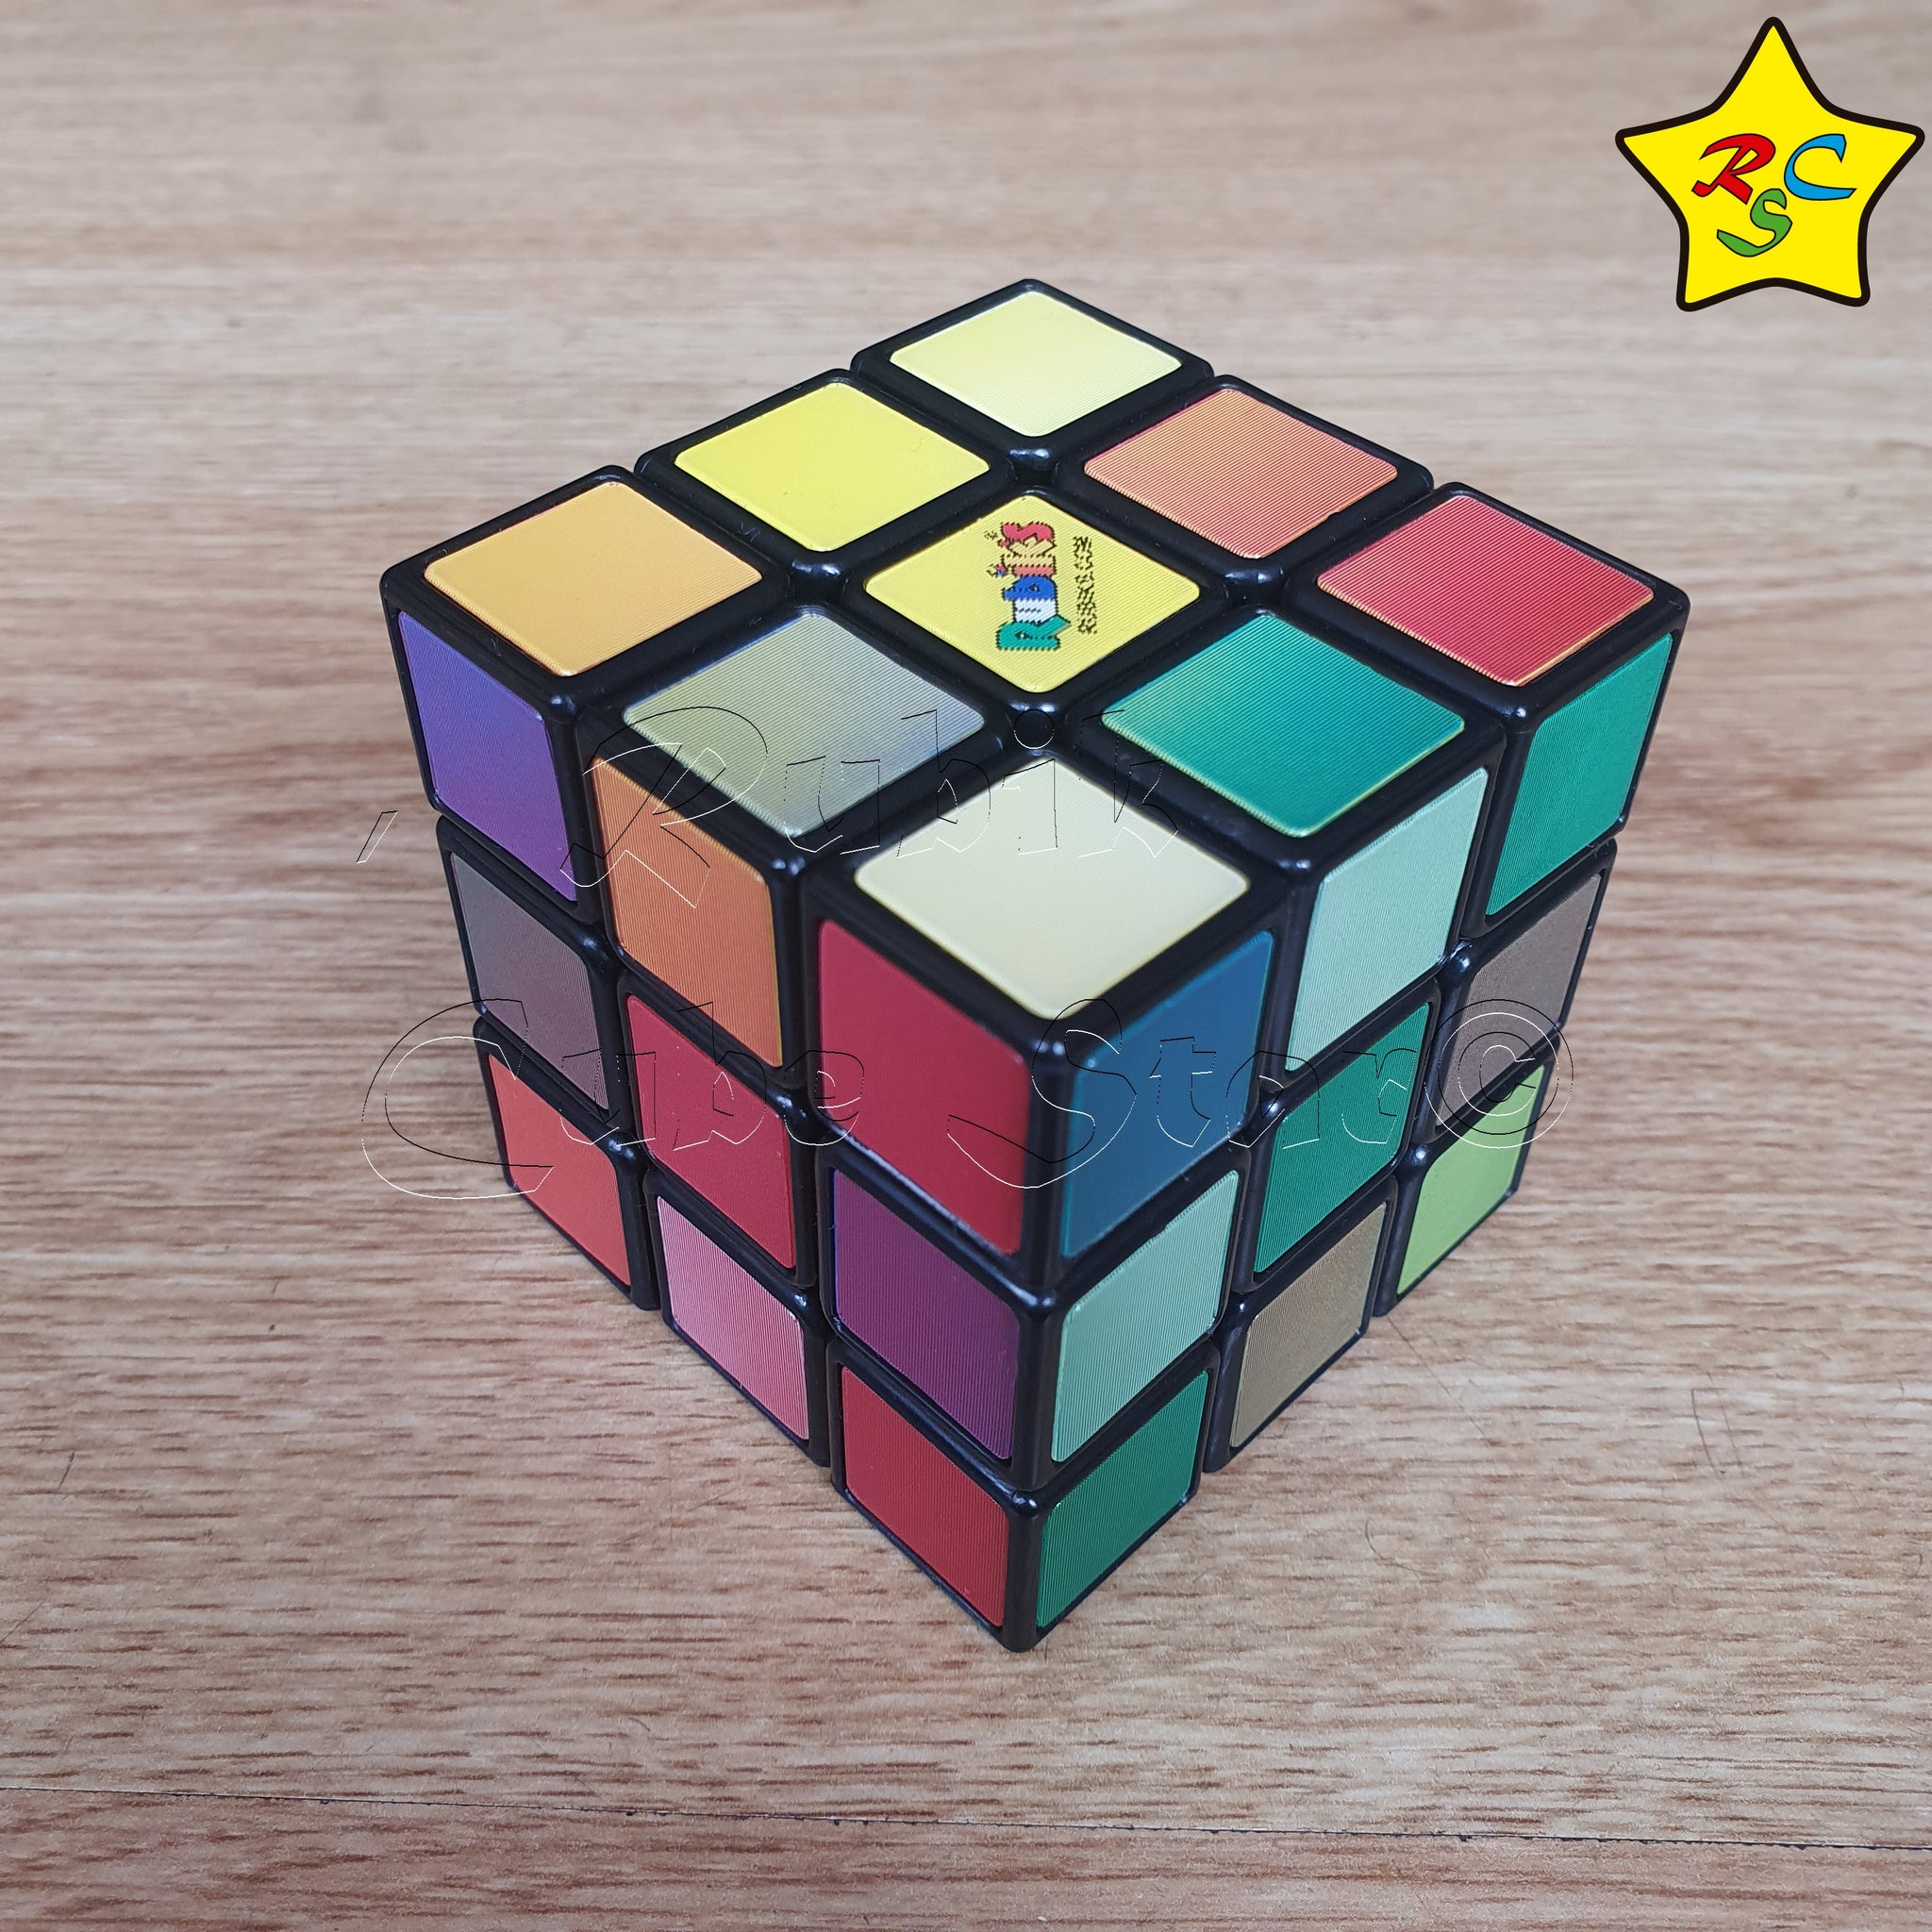 Canal Humildad Nadie Cubo Rubik's 3x3 Impossible Hasbro Original Imposible Color – Rubik Cube  Star